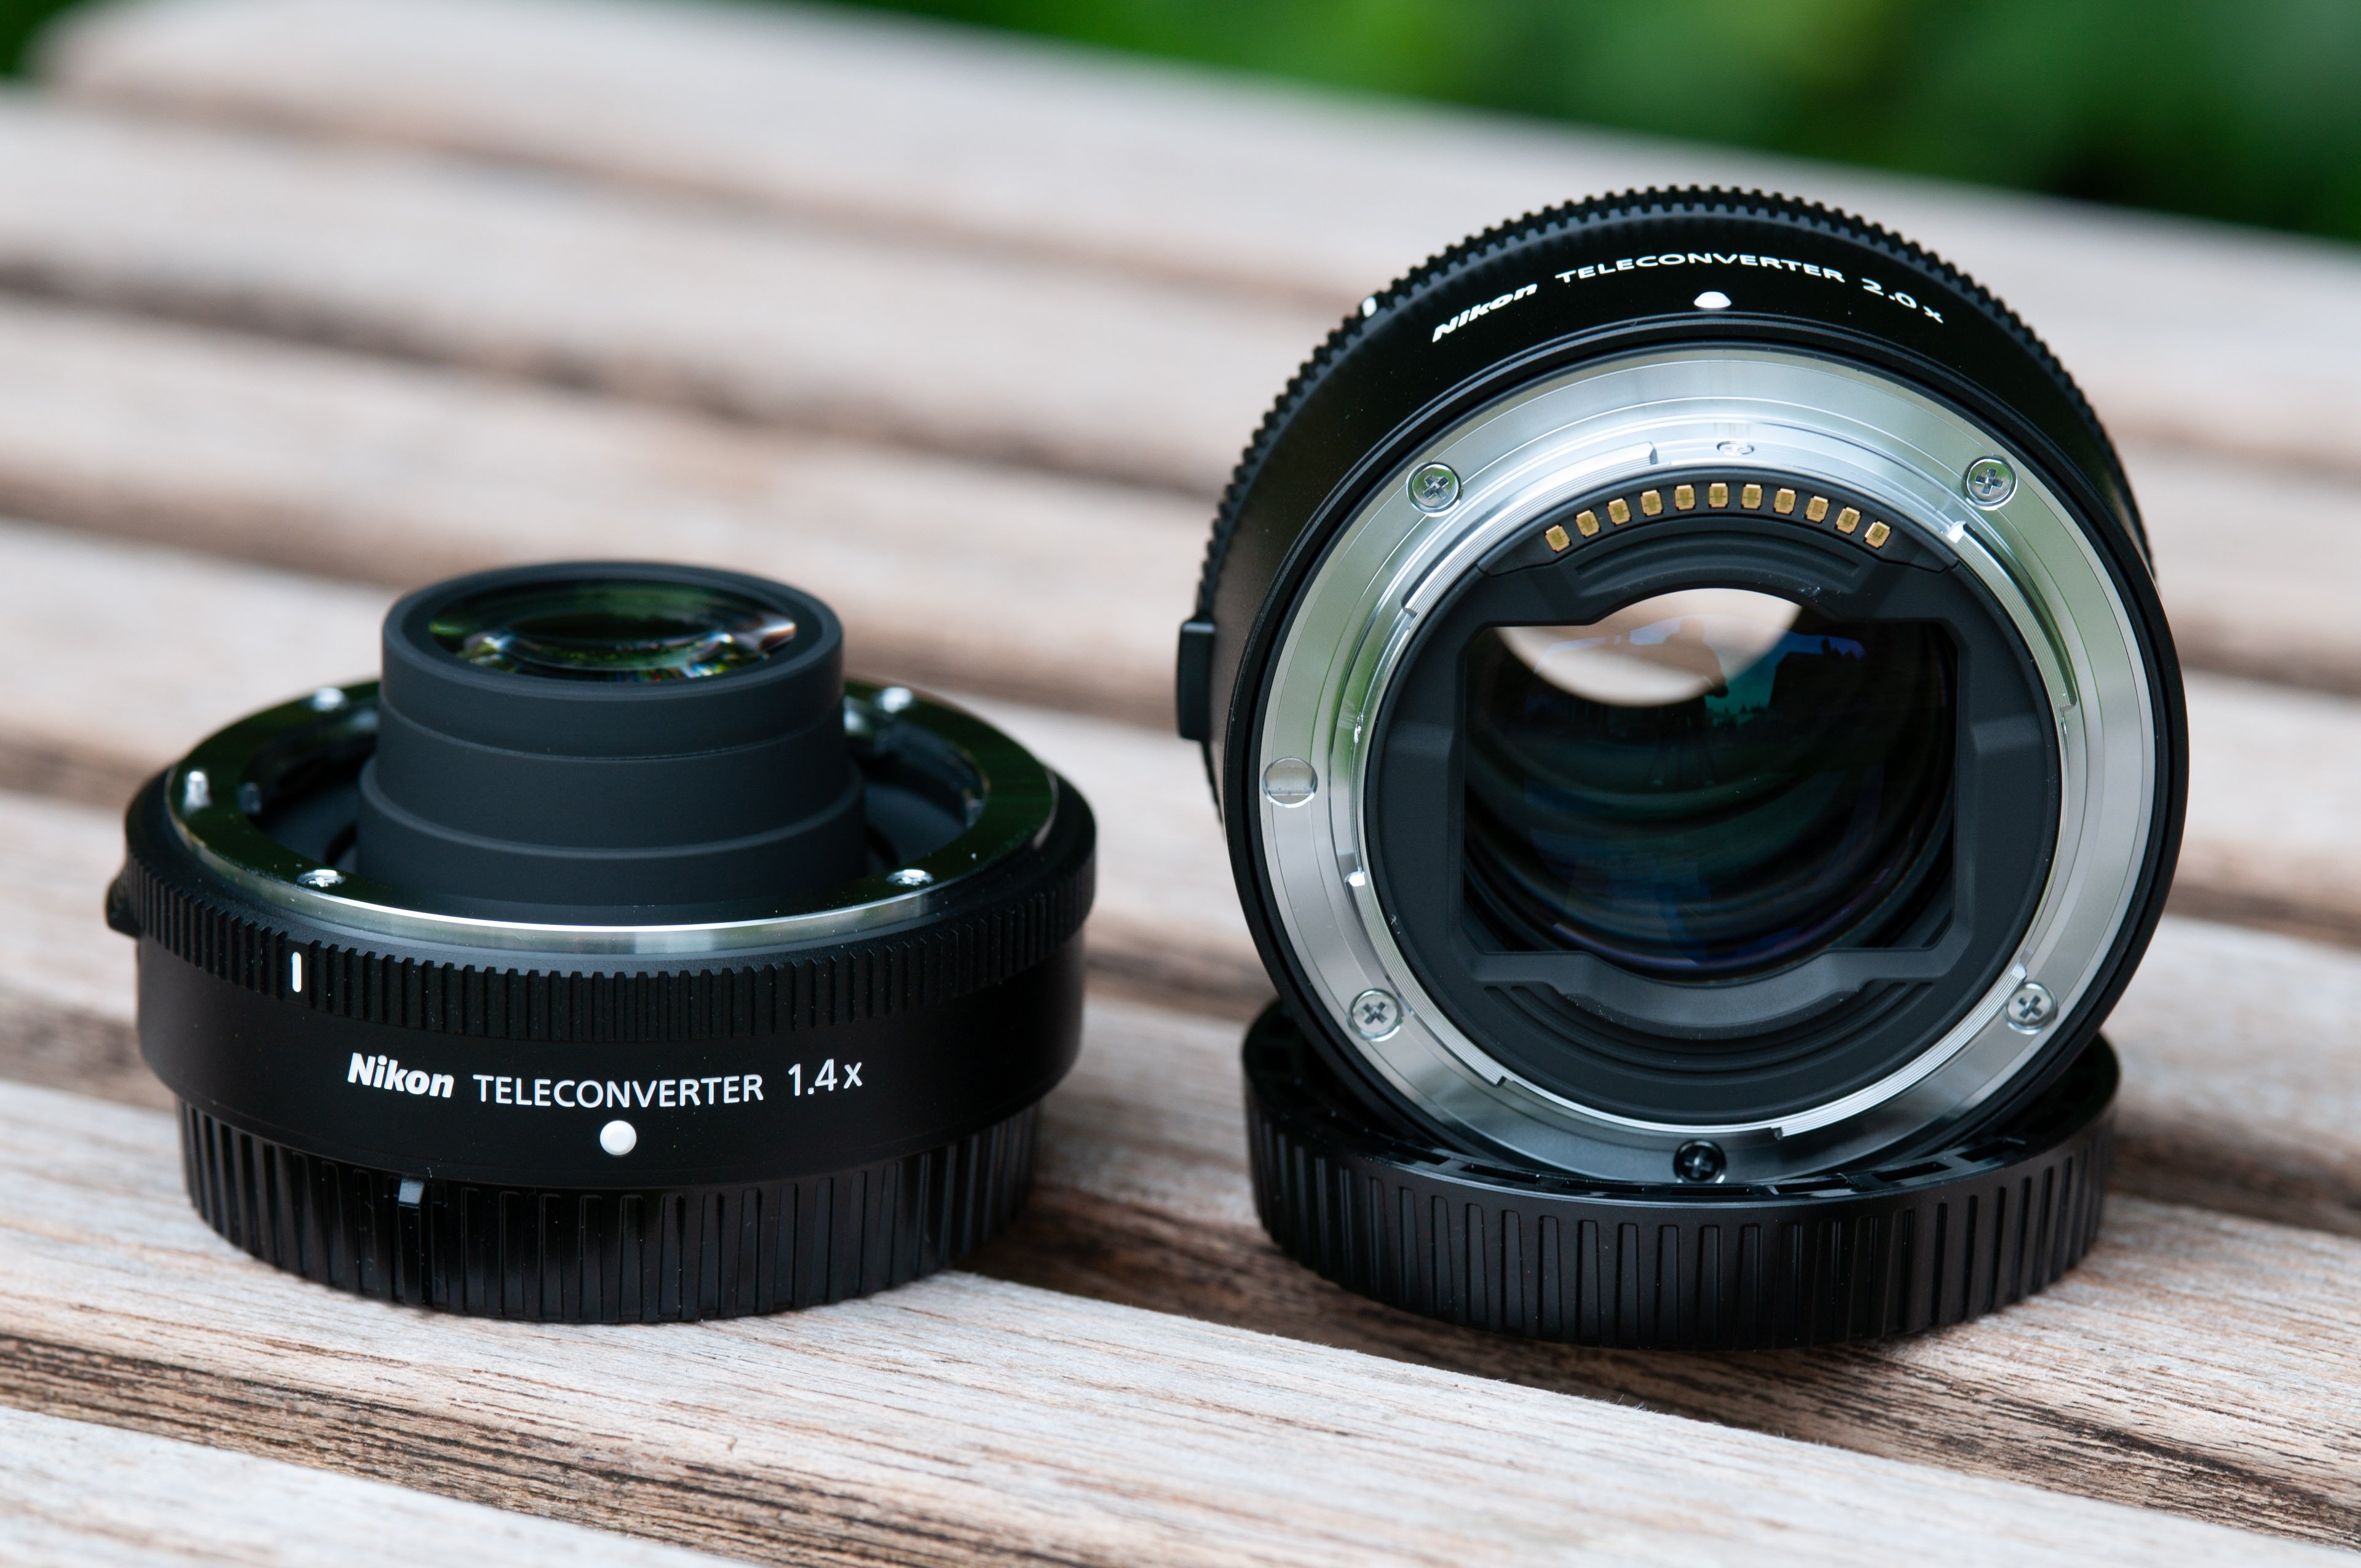 Nikon Z TC-1.4x TC-2.0x teleconverter review | Cameralabs